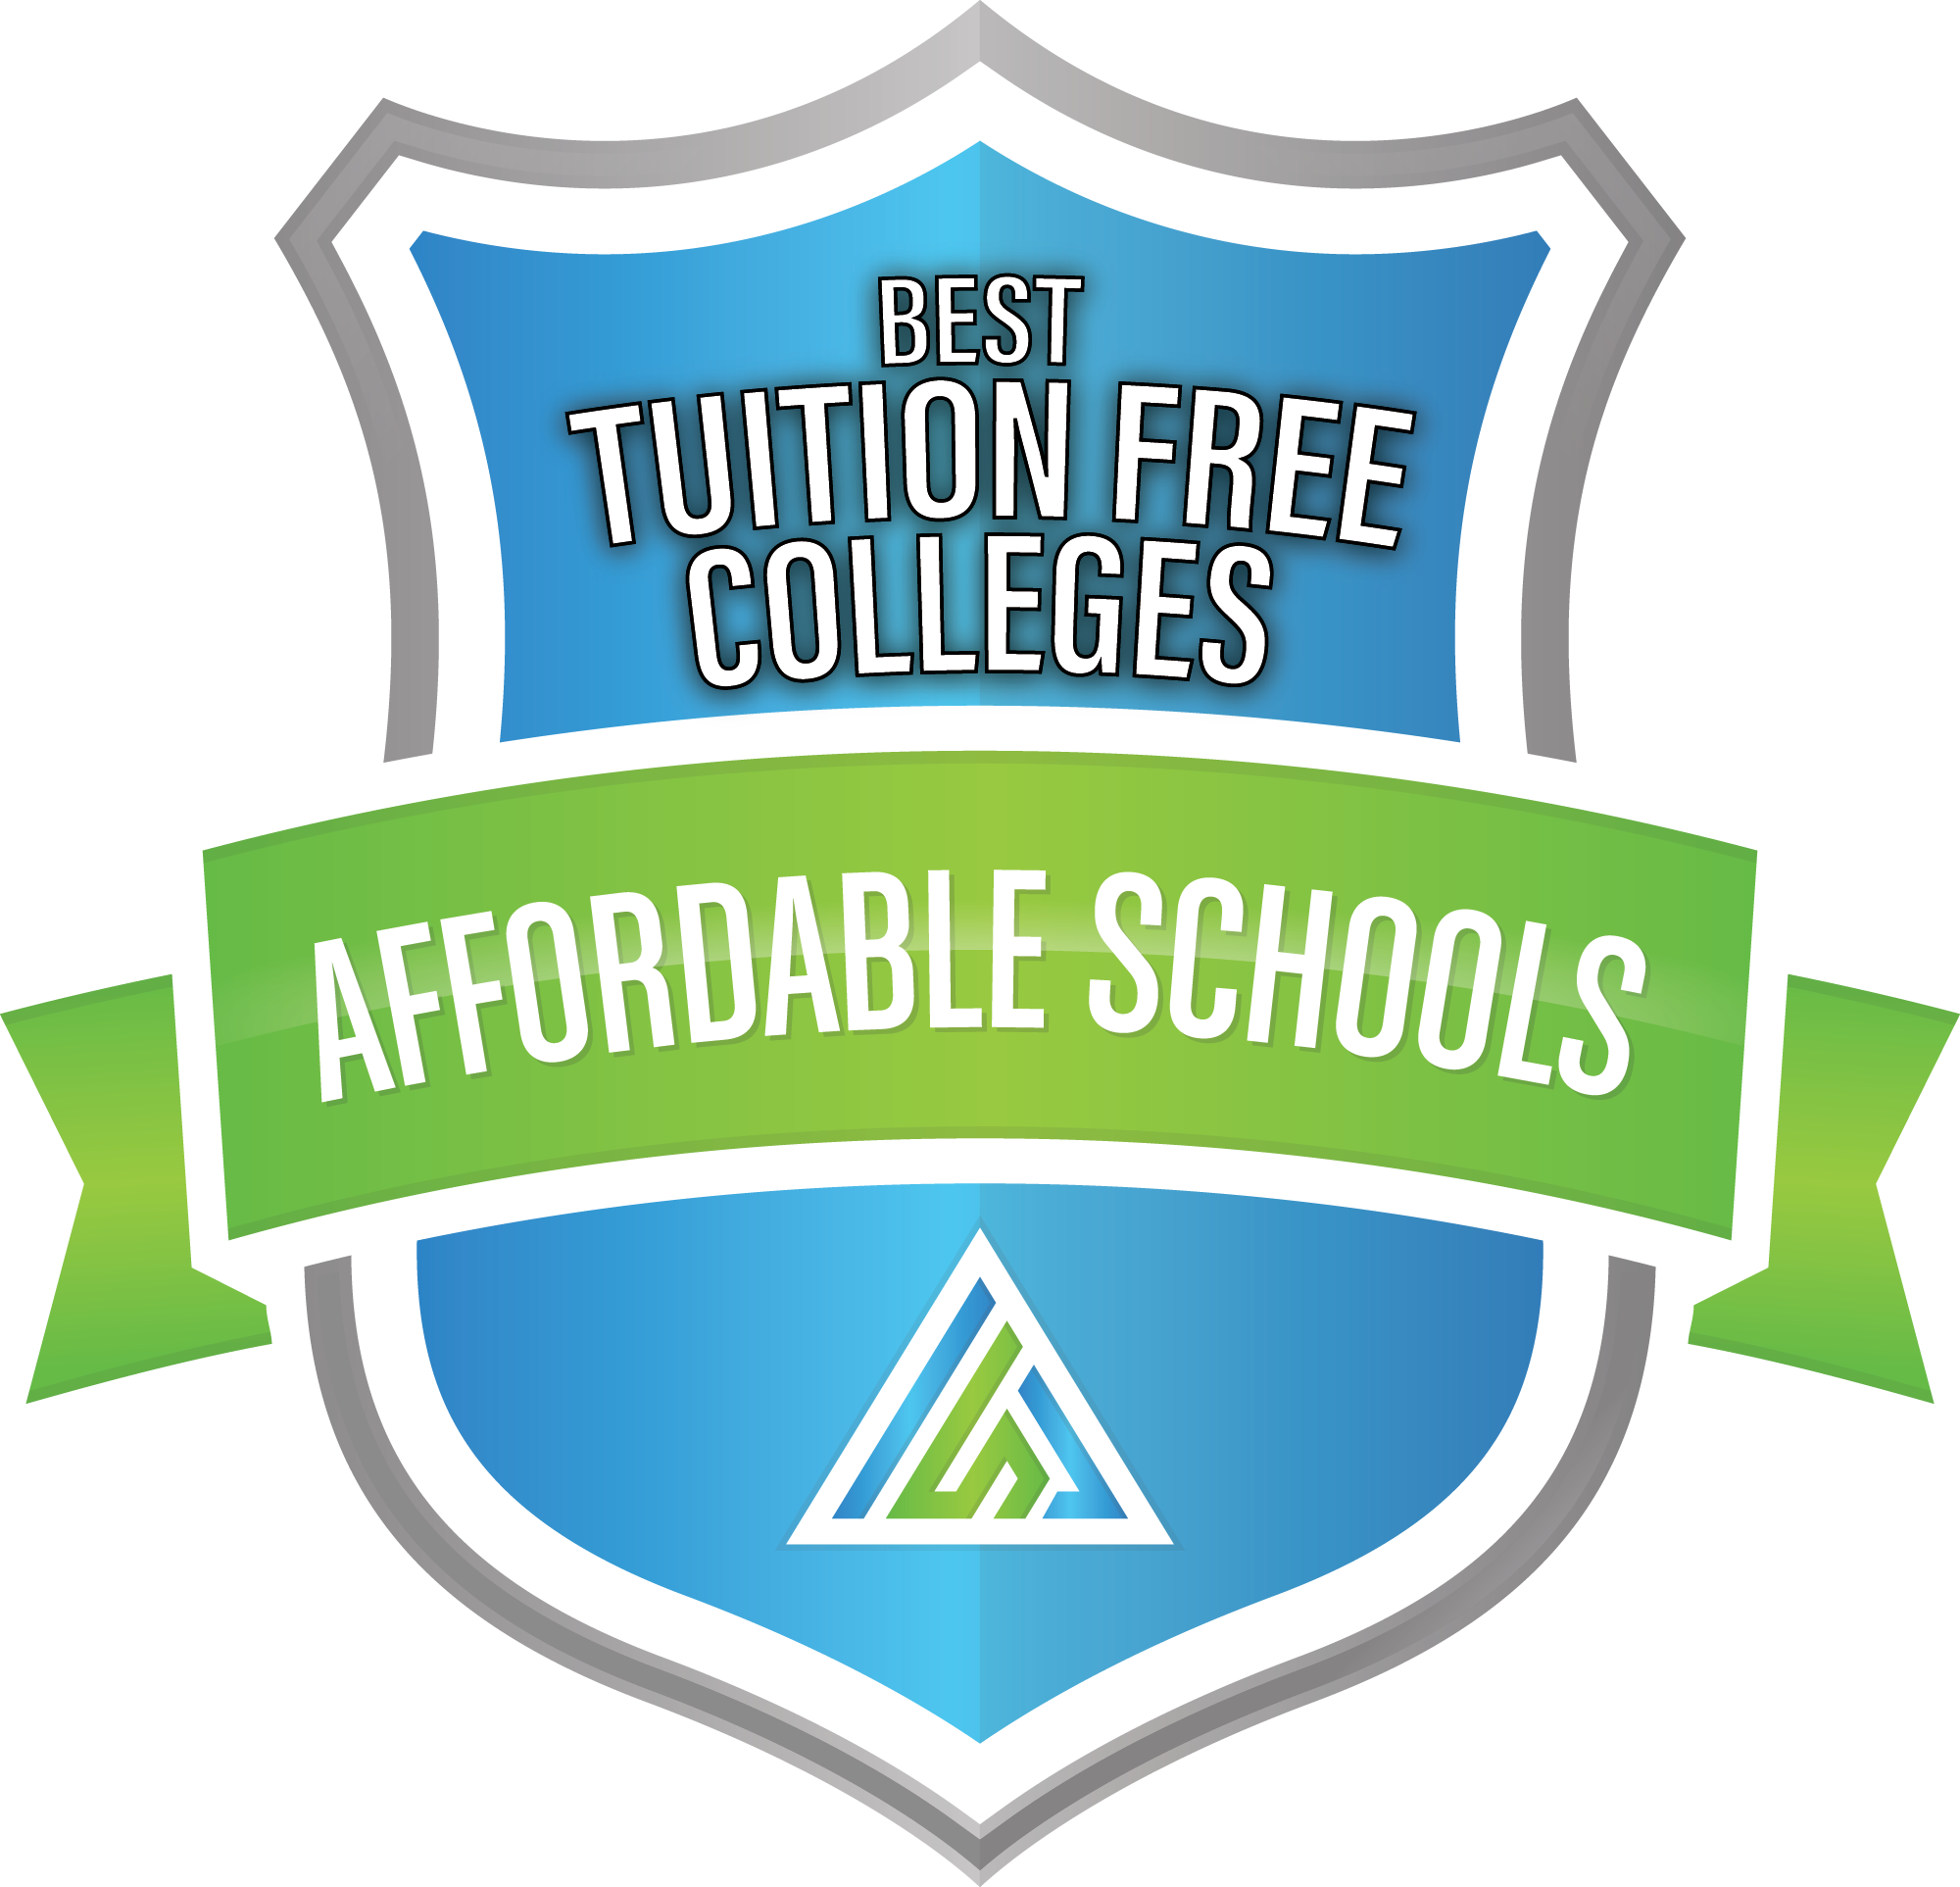 phd free tuition